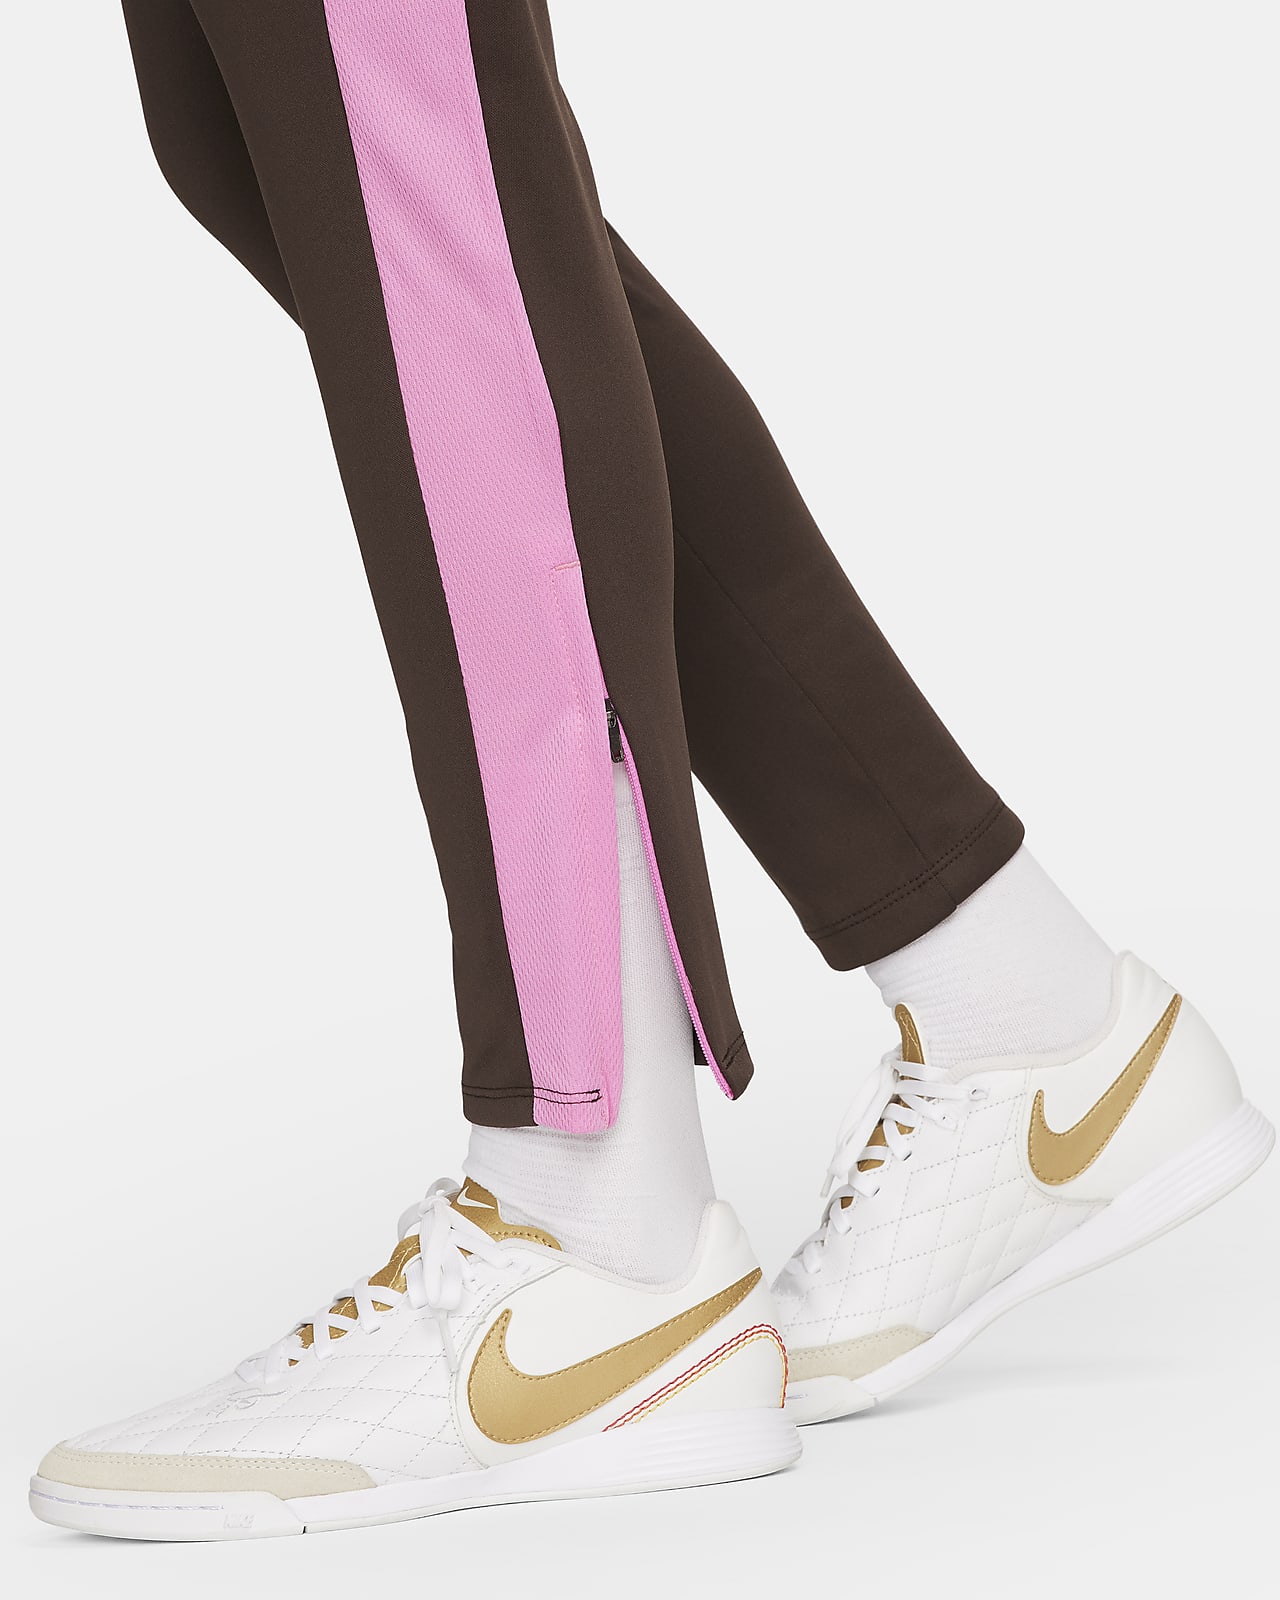 Nike Womens Black Gold One Dri-FIT Colorblocked Mid Rise Leggings Pant  Small New